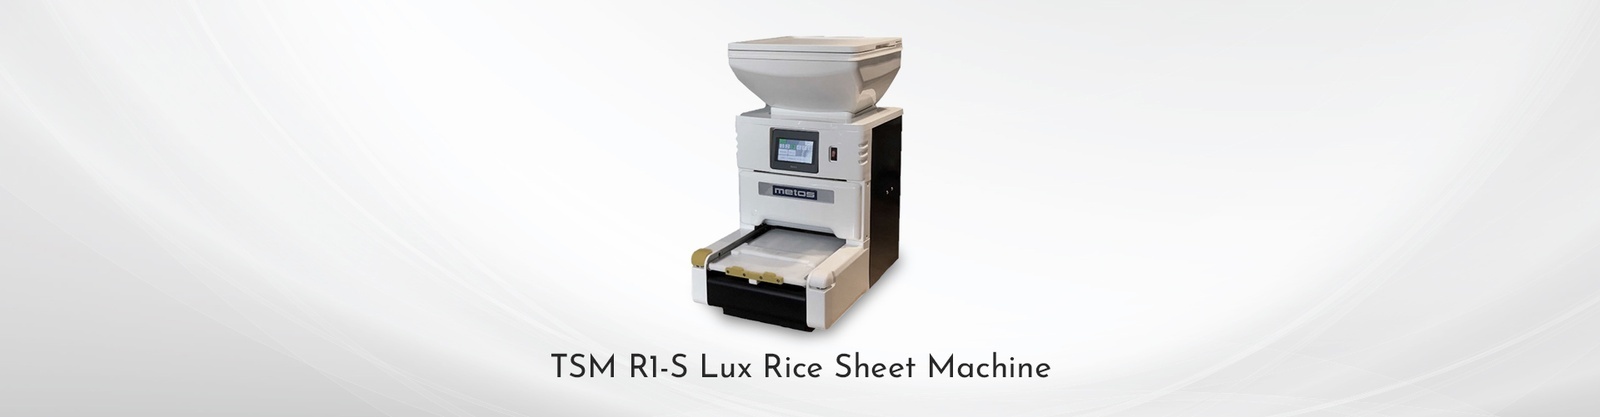 TSM R1-S Lux Rice Sheet Machine